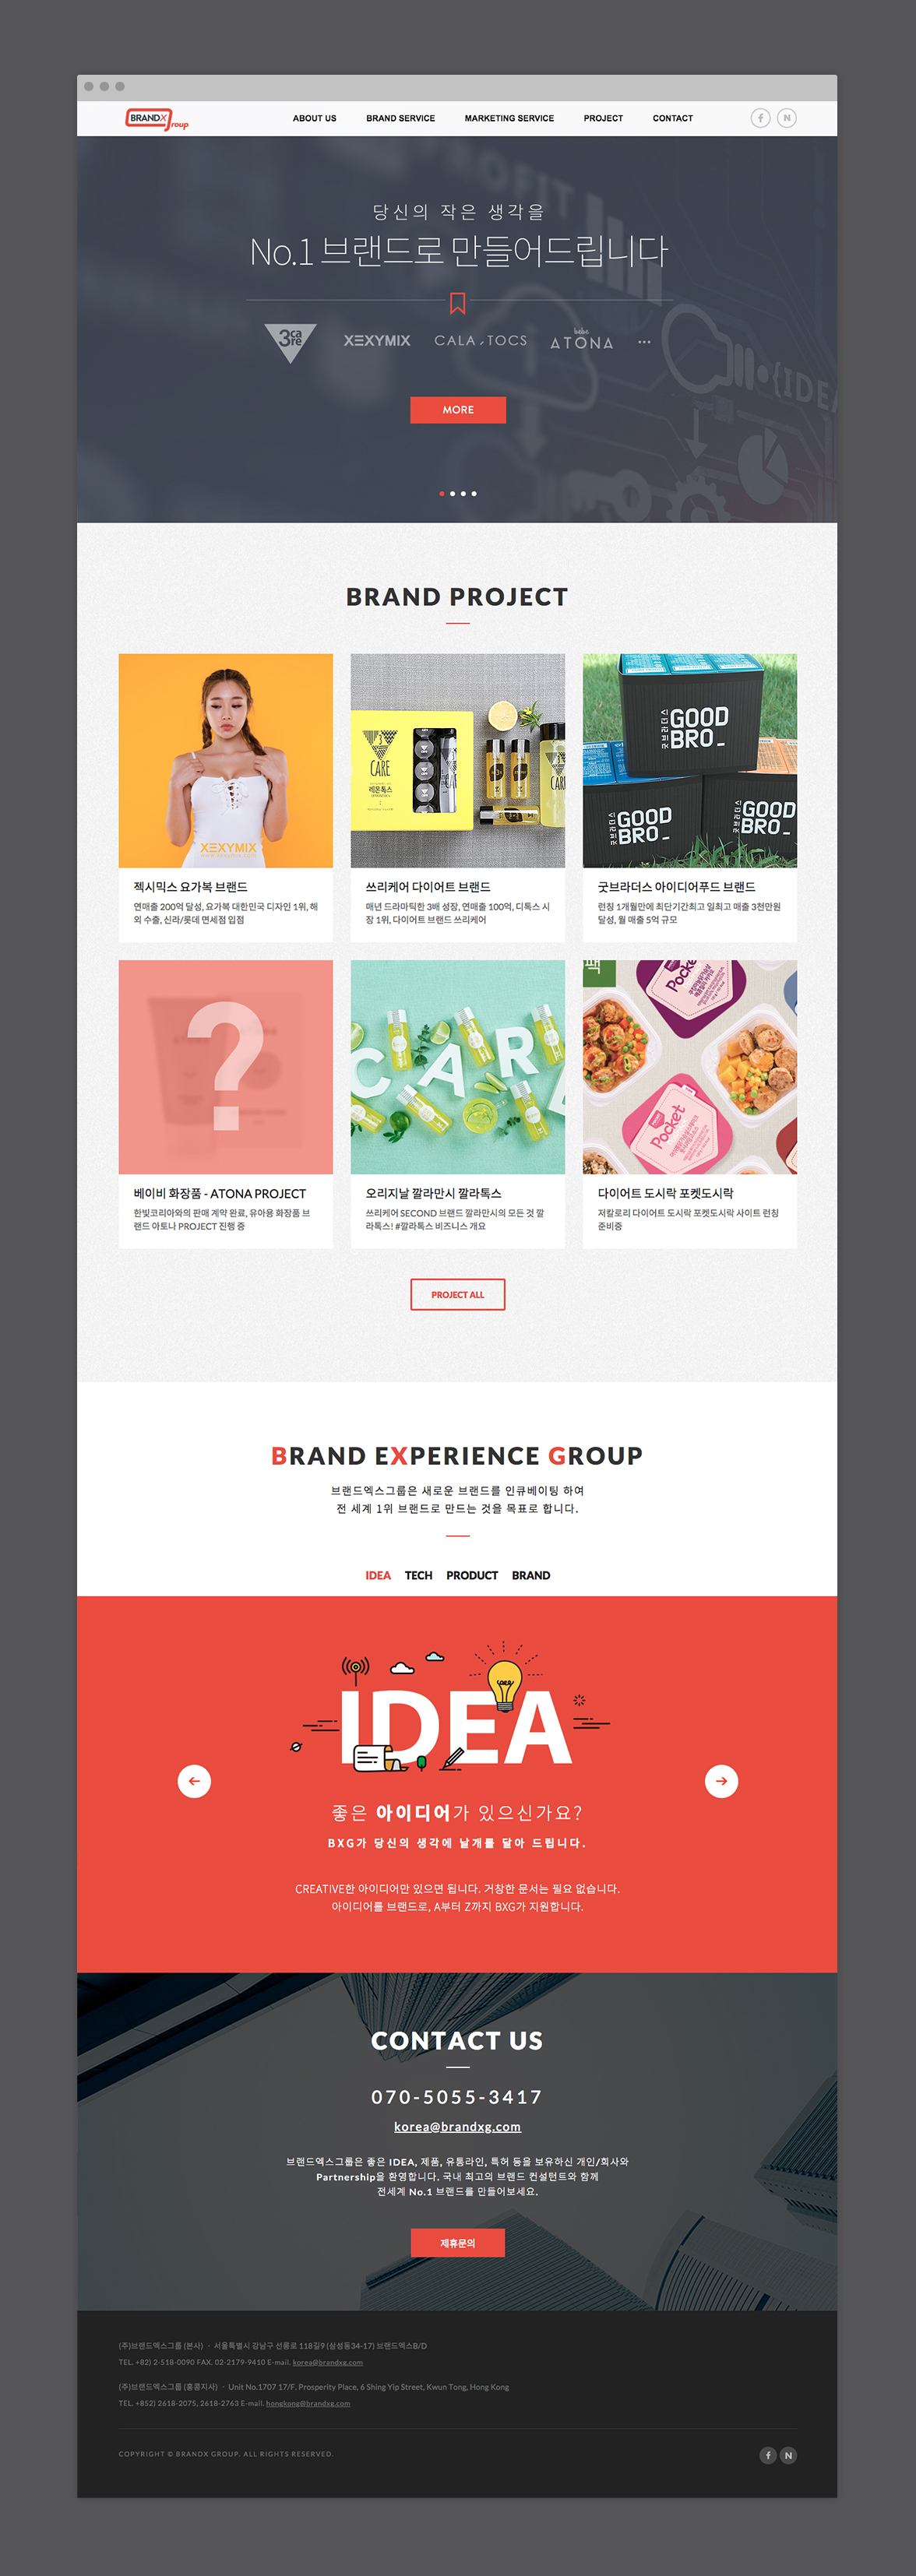 BXG Homepage Web Design | Sugar Design